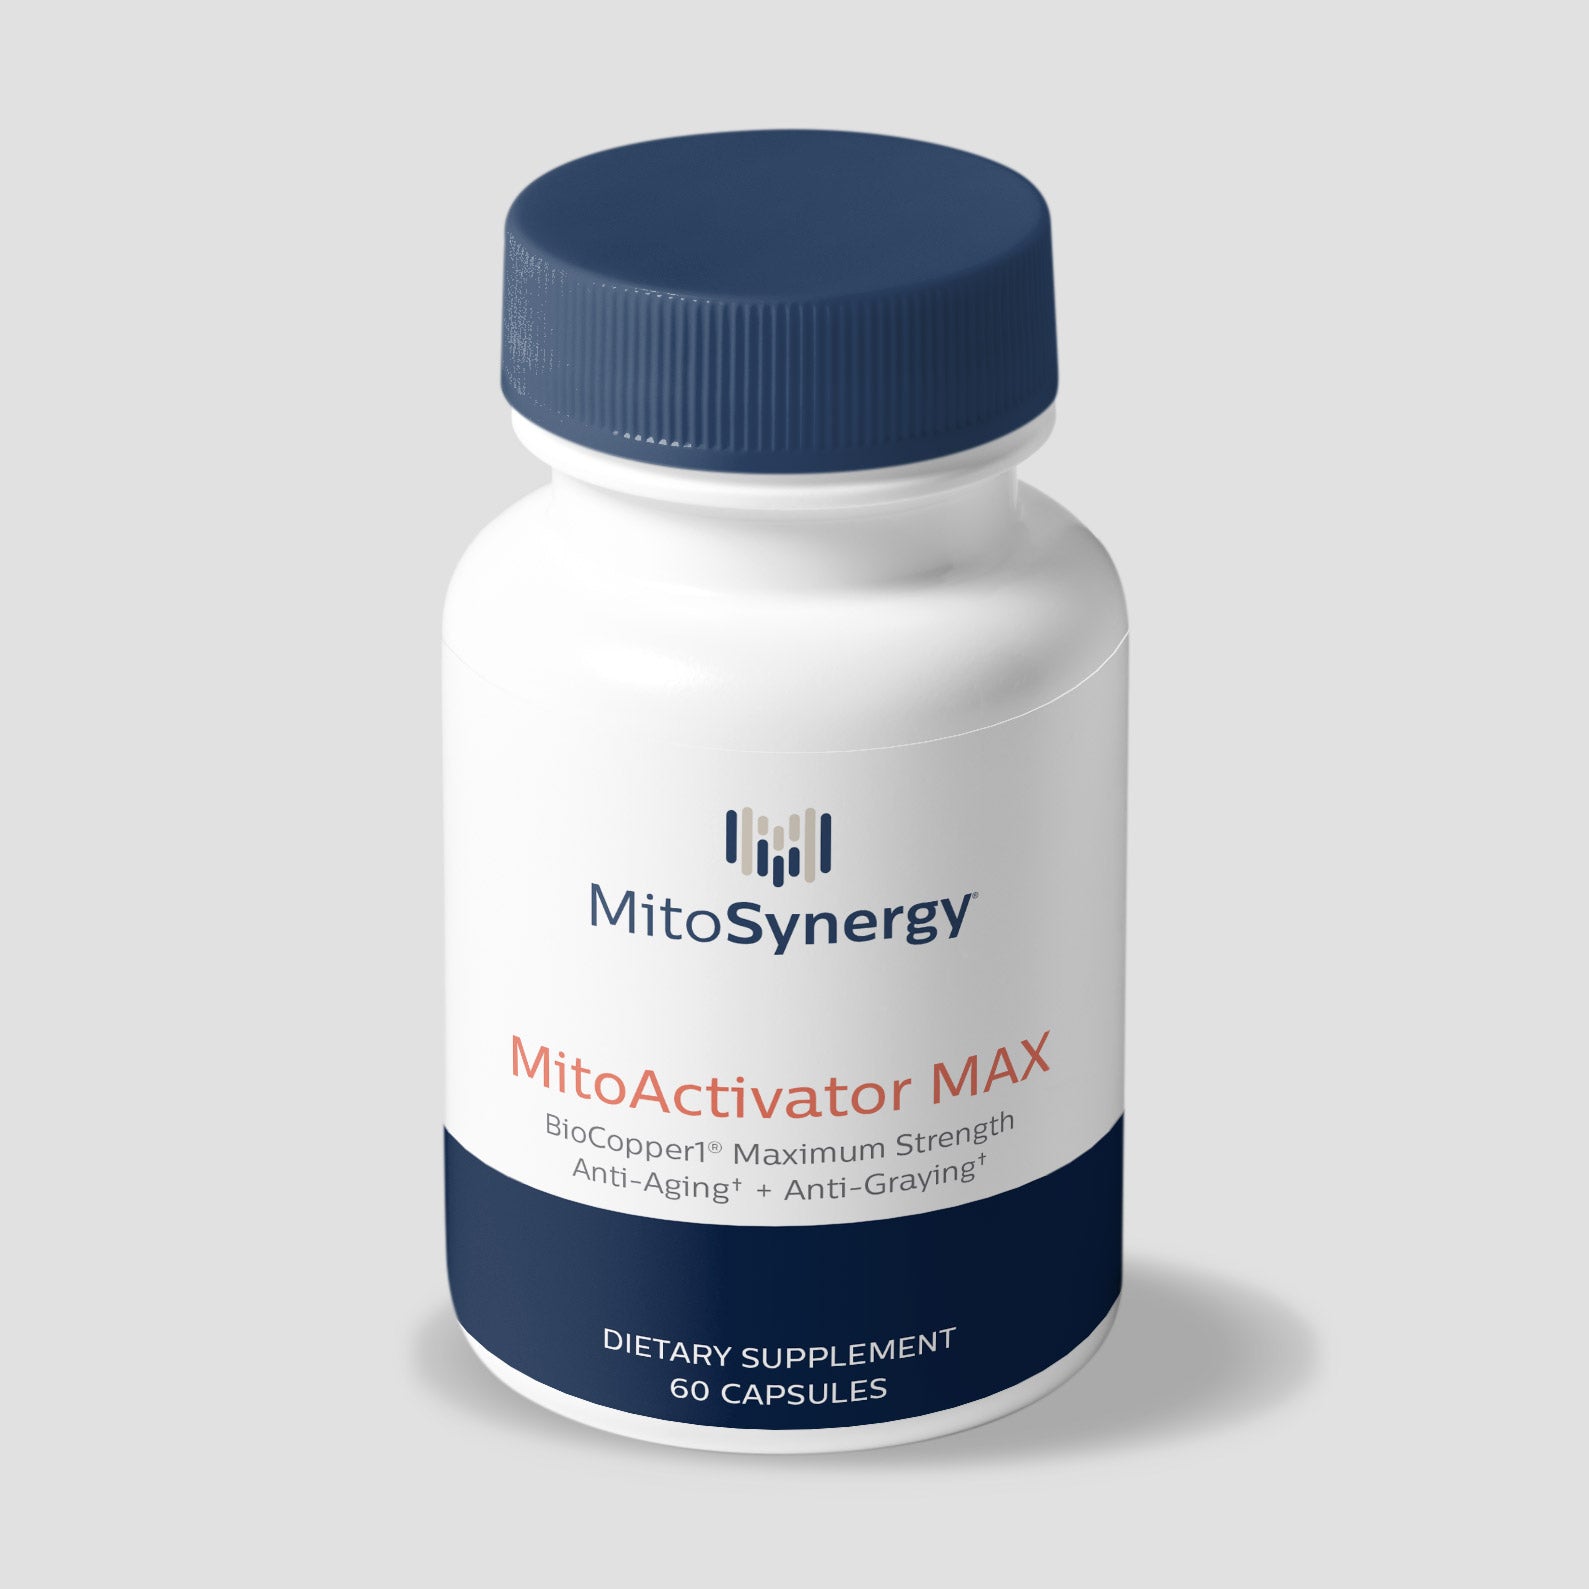 MitoActivator MAX with BioCopper1 (Cunermuspir)